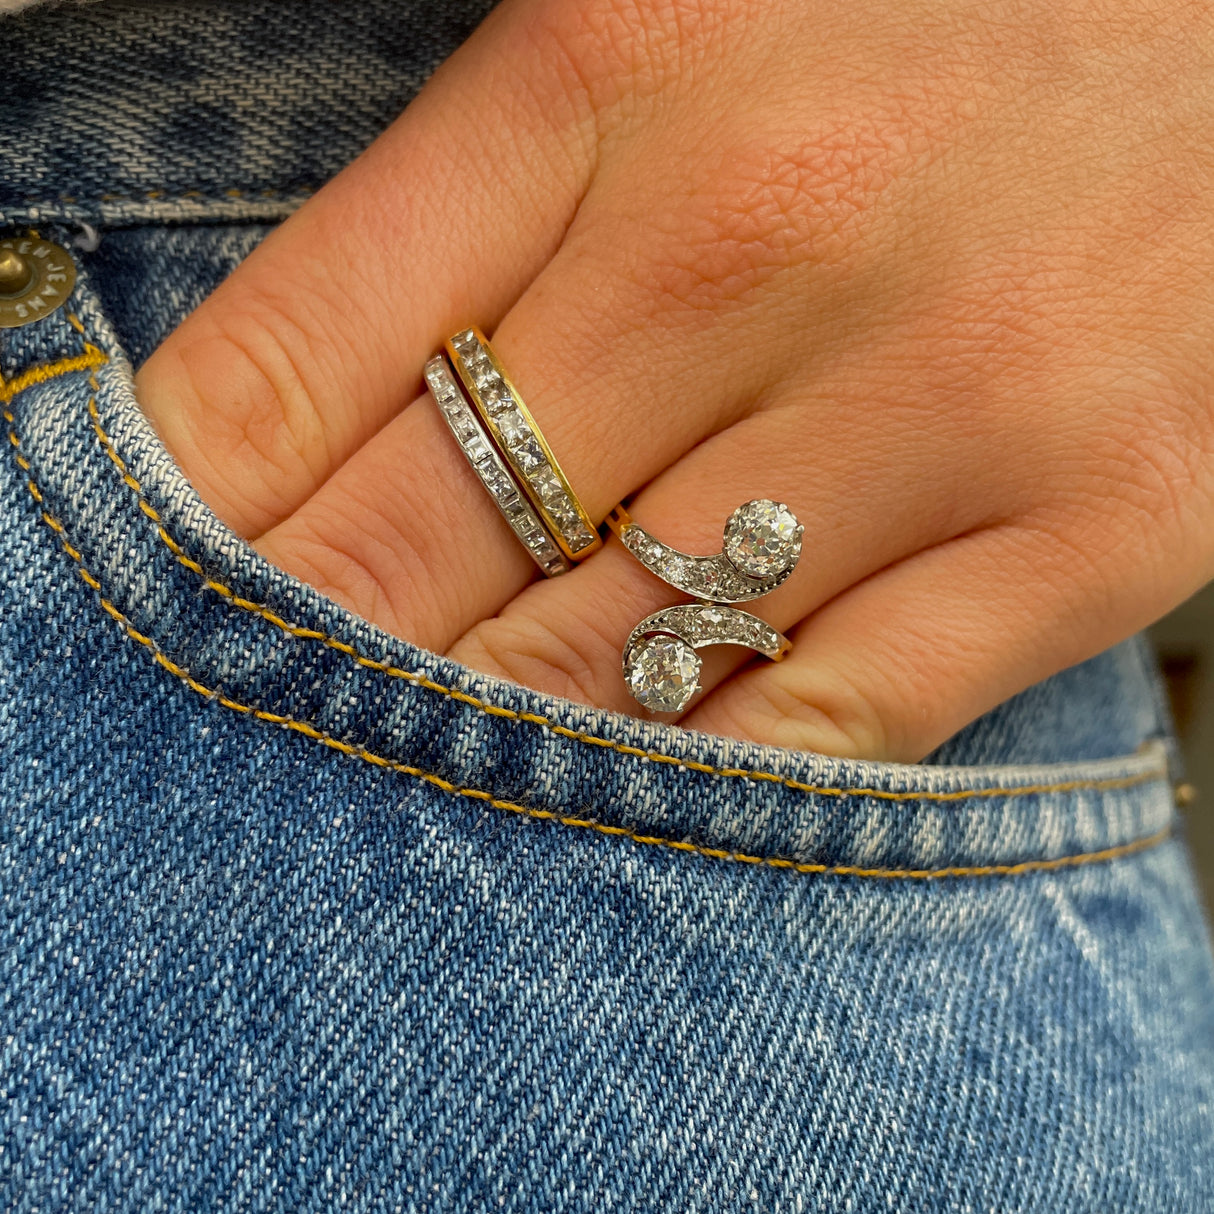 vintage toi et moi diamond ring, worn on hand in pocket of jeans.